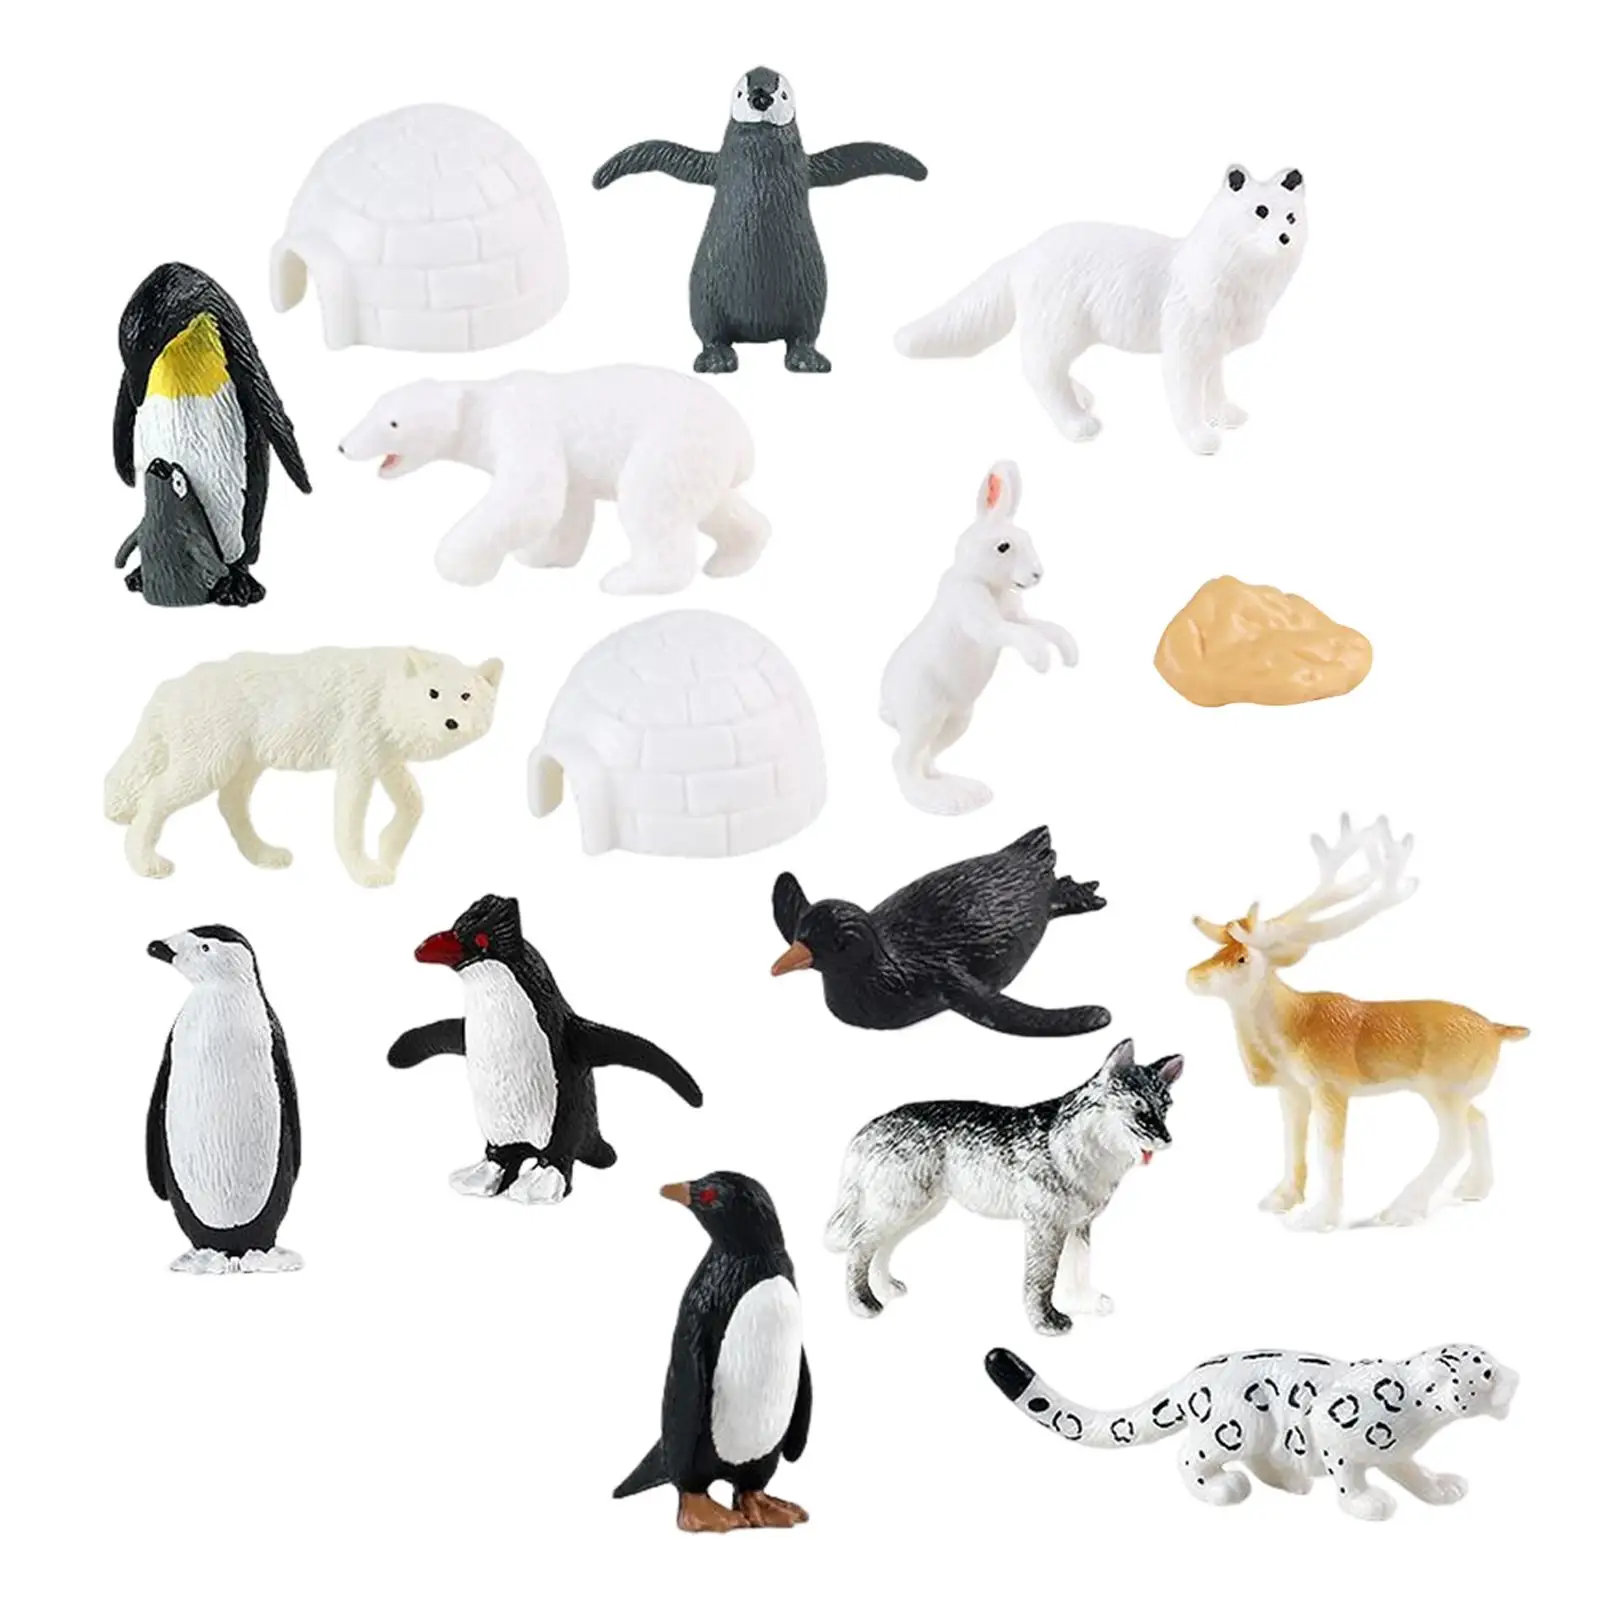 16Pcs Realistic Arctic Animals Includes Arctic Reindeer, Penguins, Polar Bear, Arctic Fox, Igloo Figure Toy for Birthday Gift